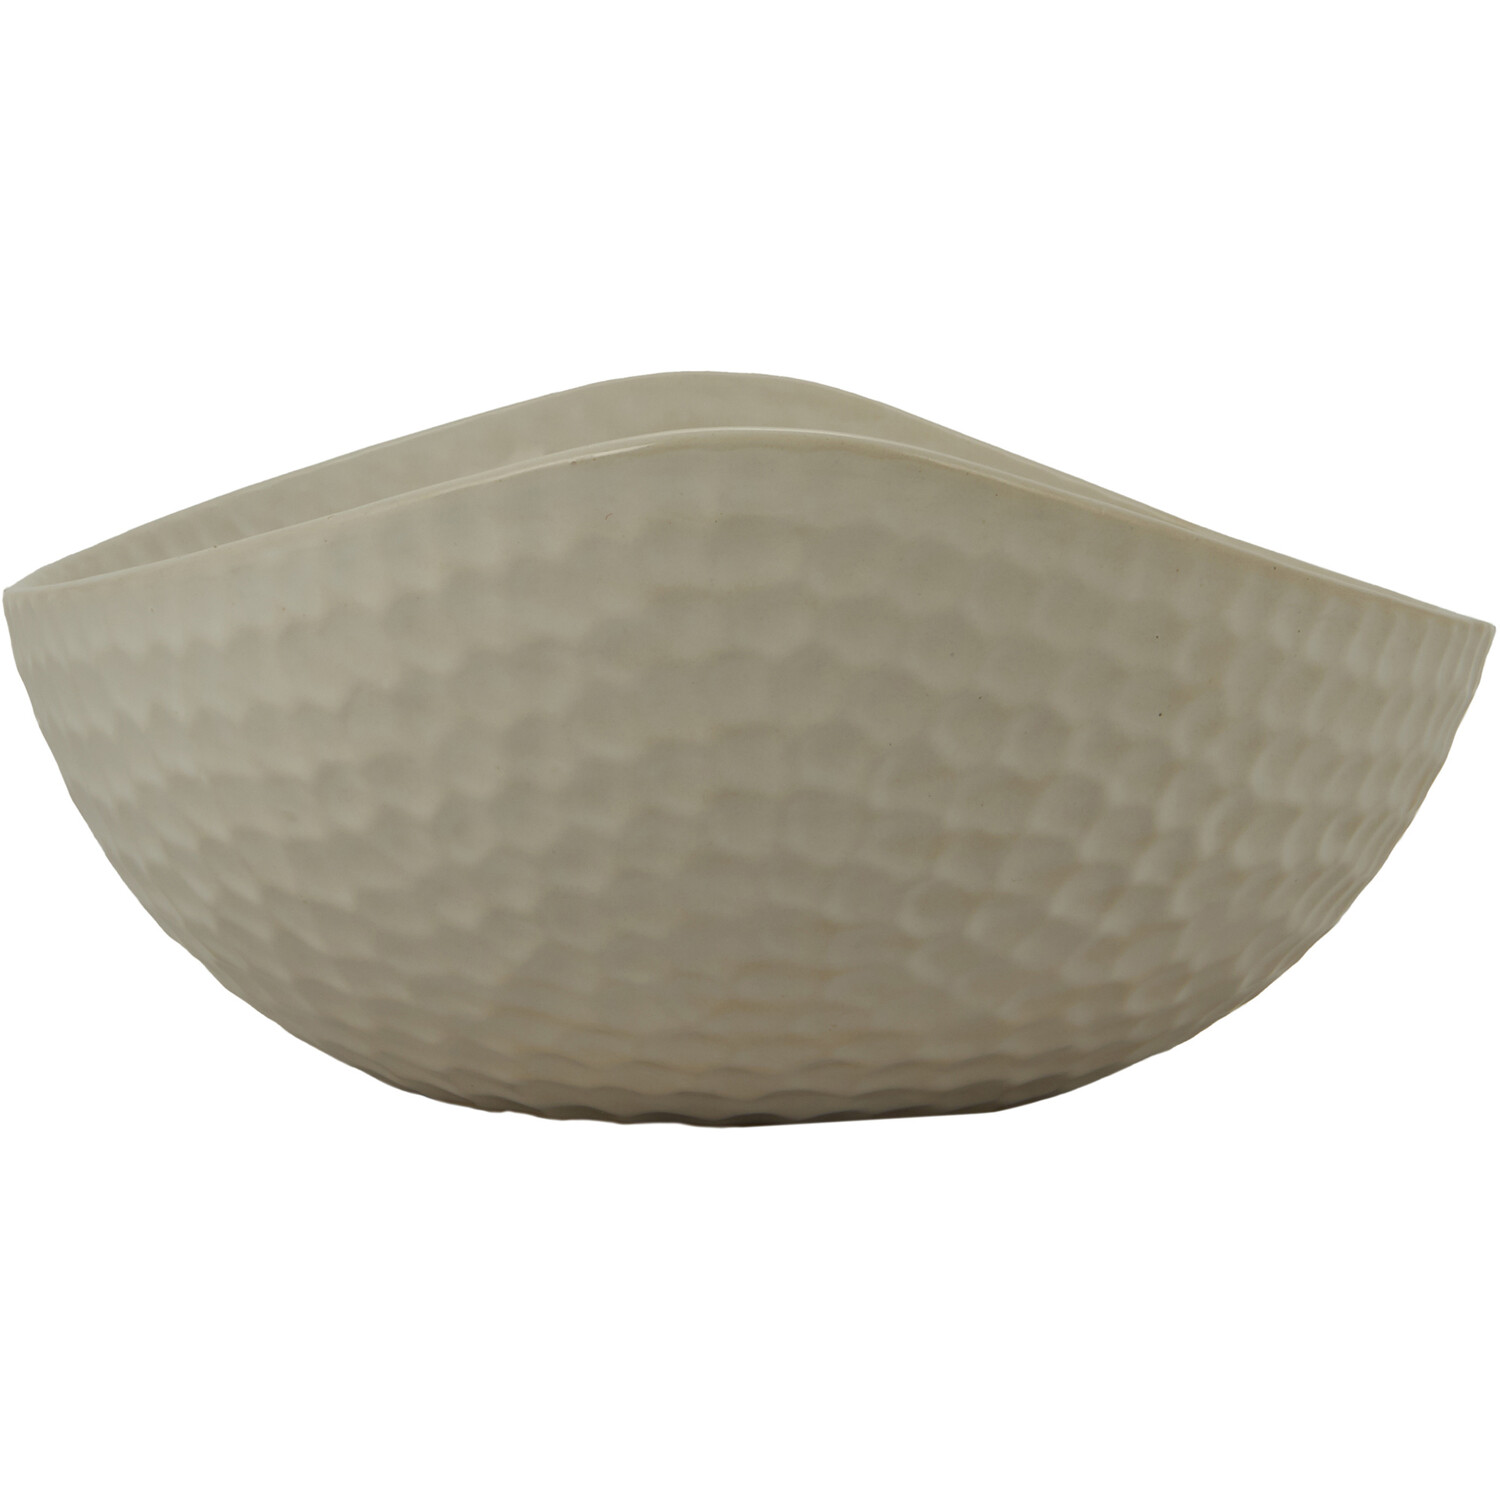 Hammered Matte Bowl - White Image 4